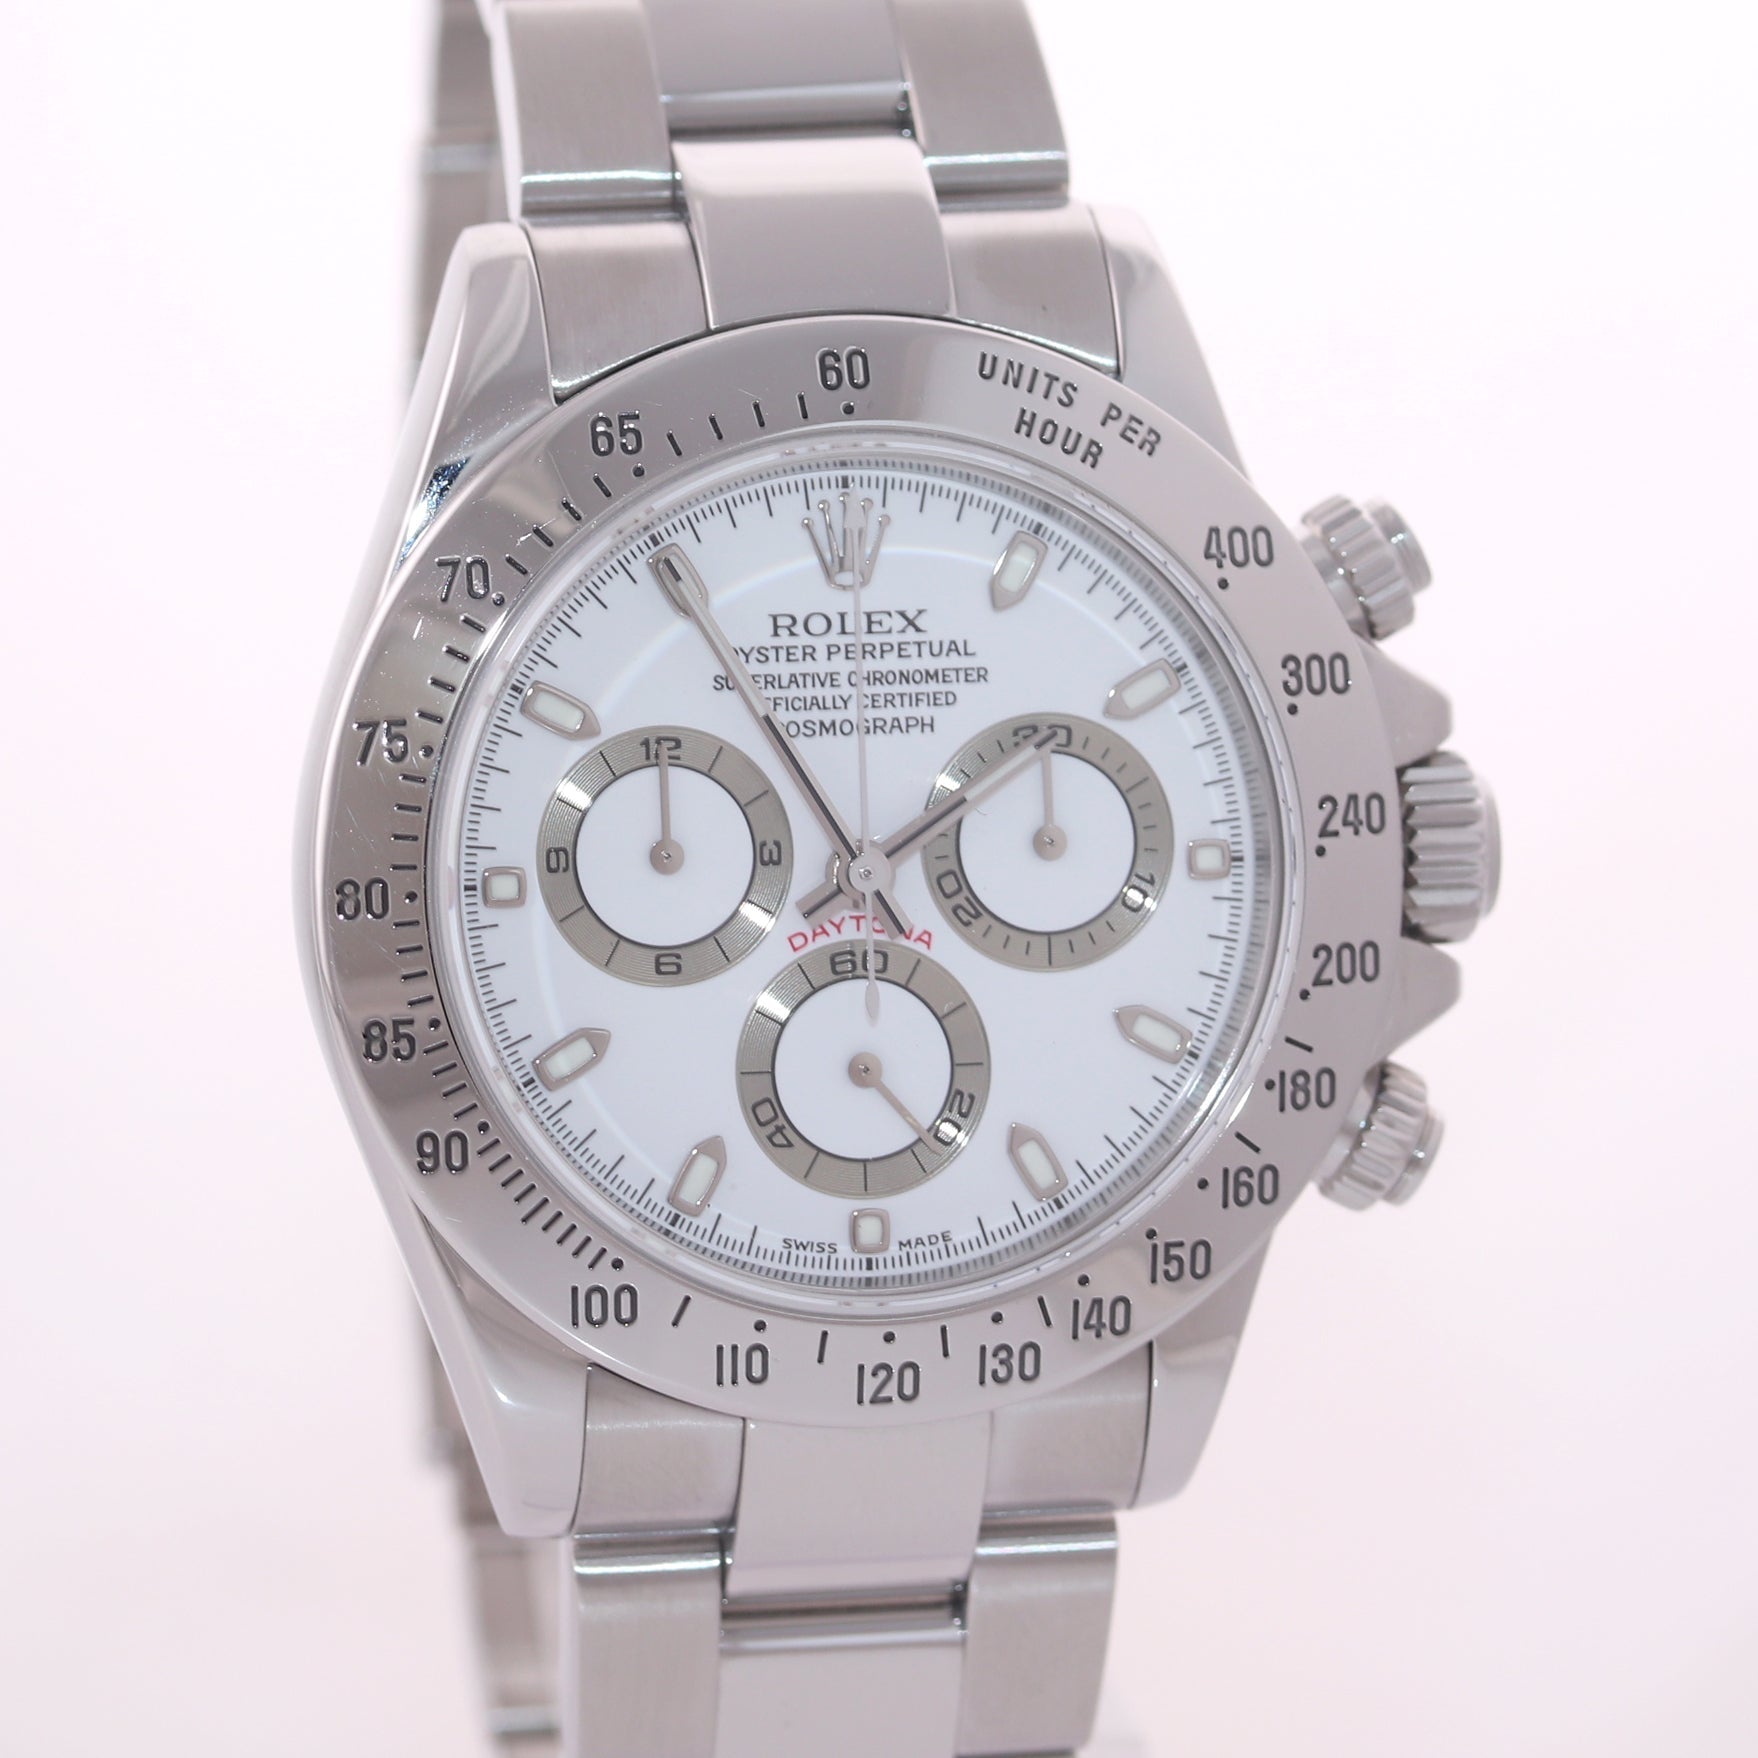 2004 Rolex Daytona 116520 White Dial Steel 40mm Chrono Watch Box